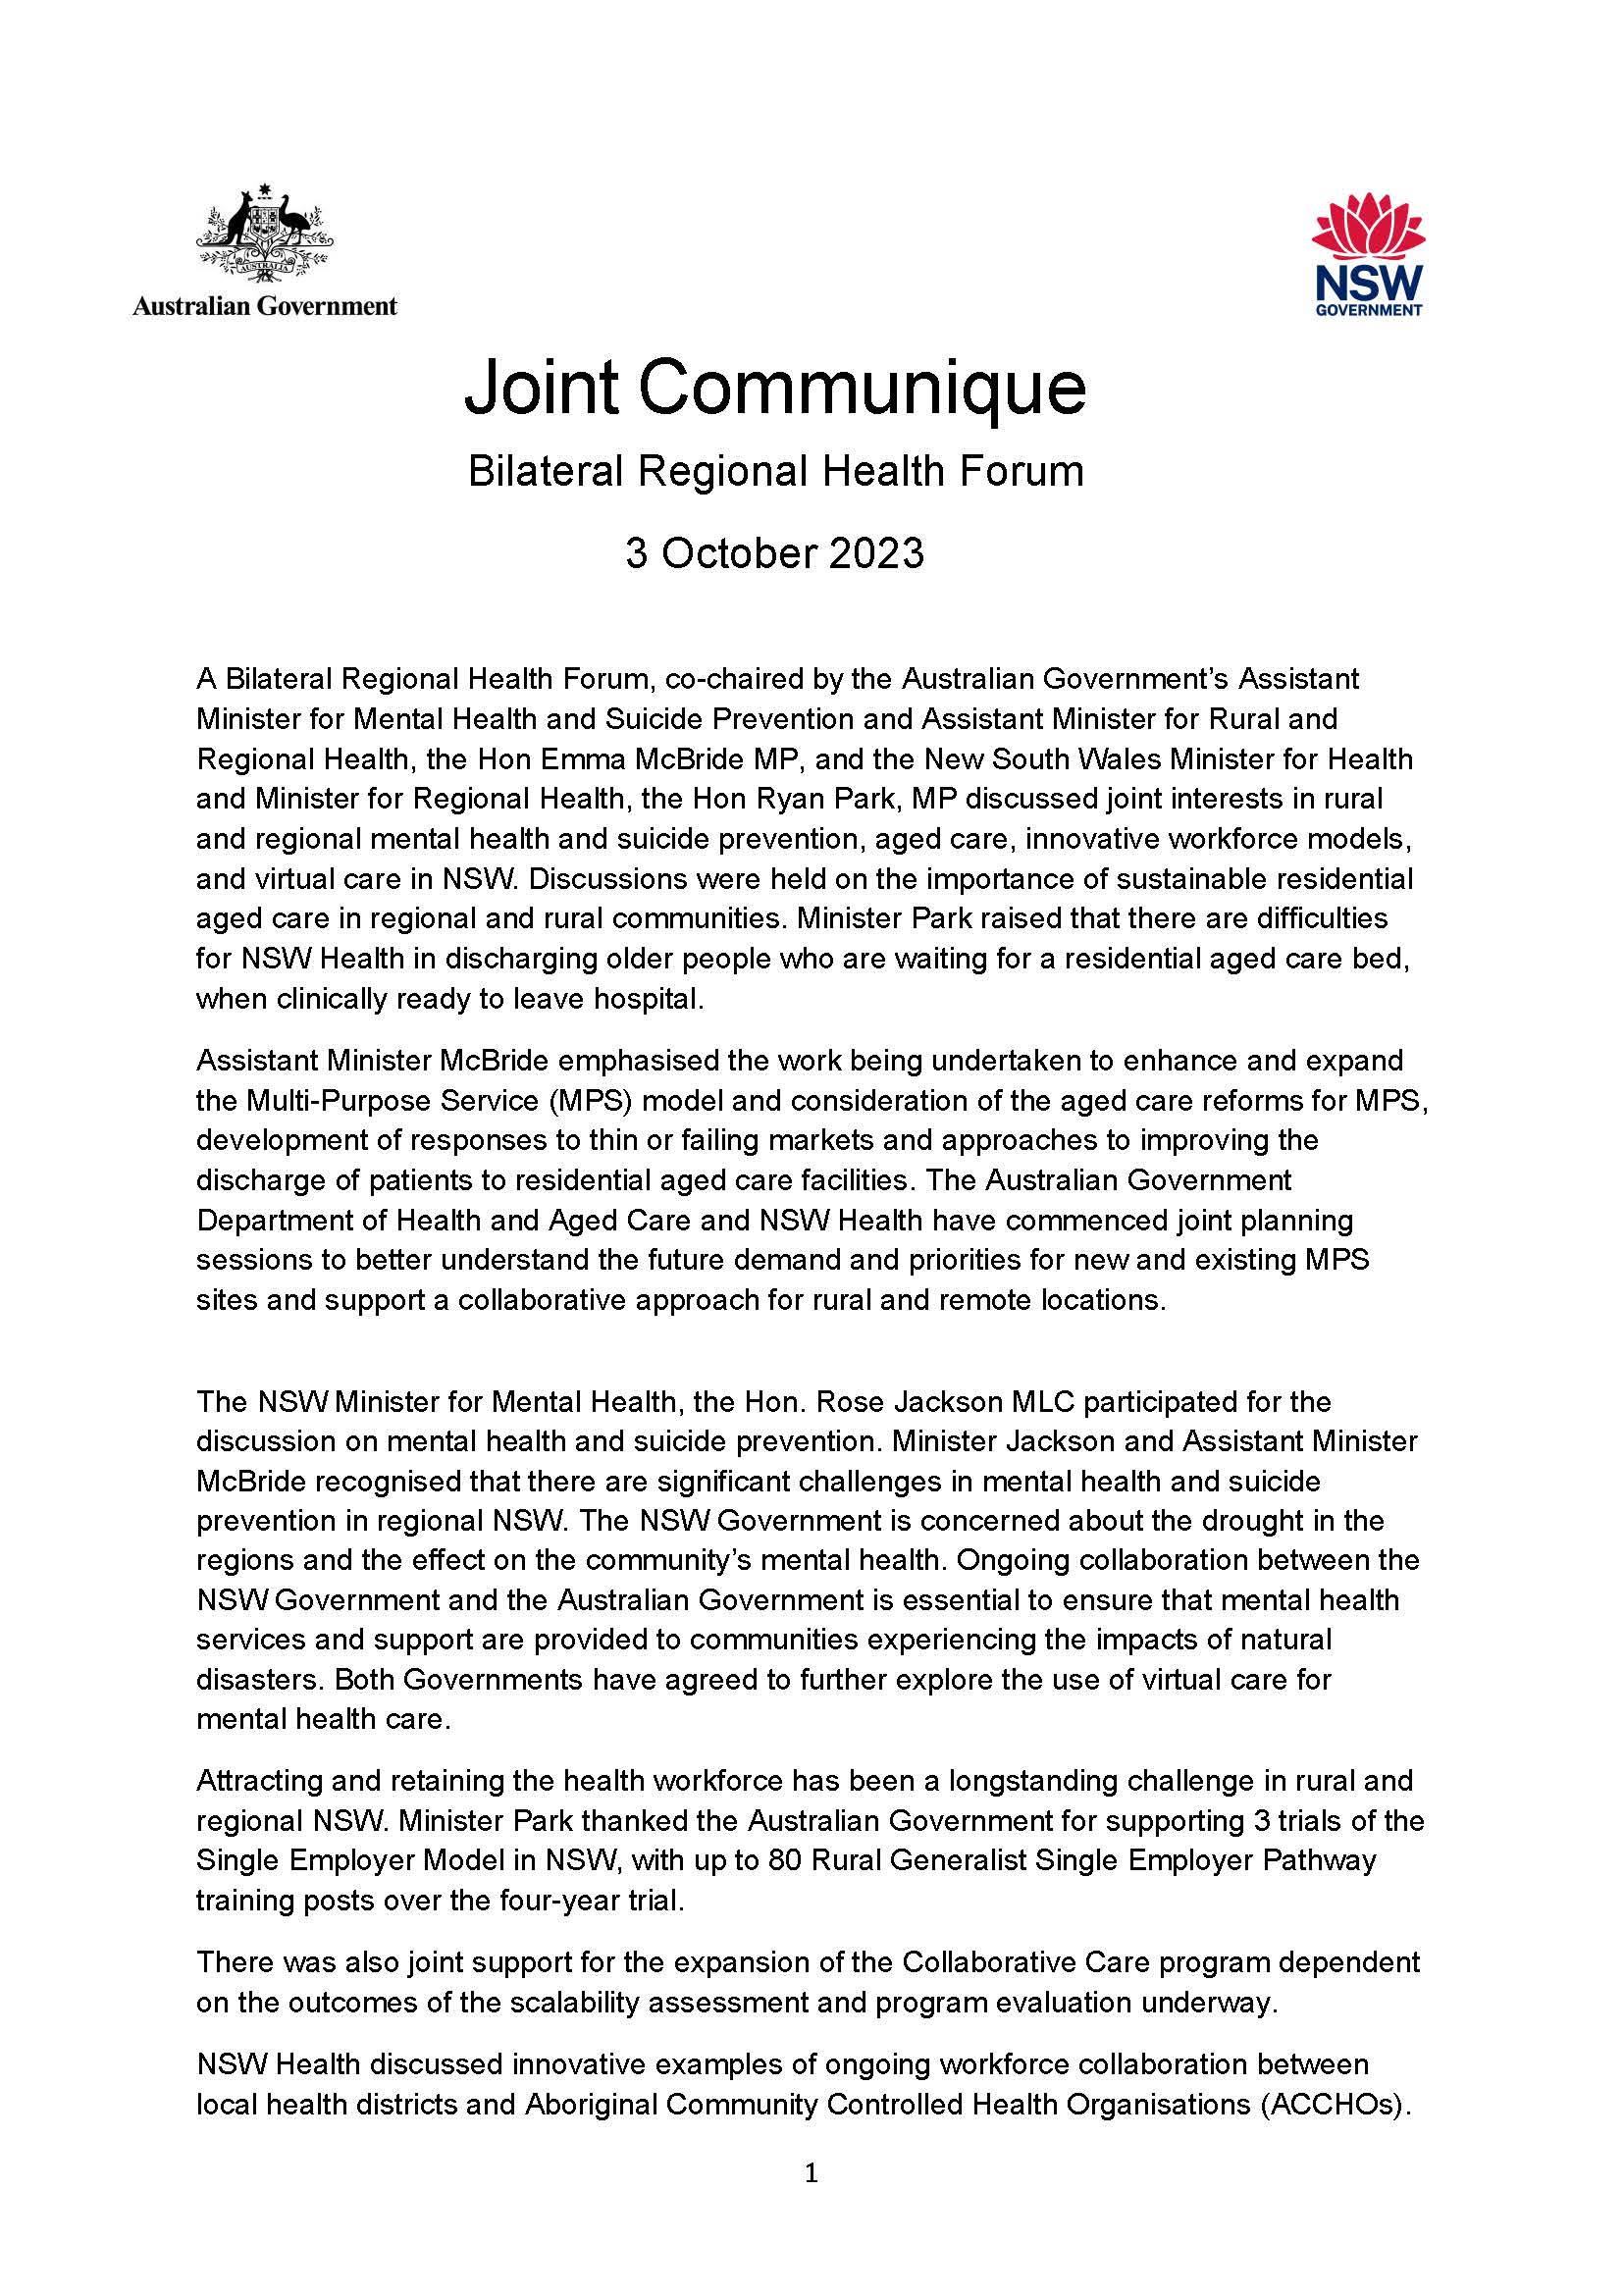 PDF: Bilateral Regional Health Forum - Joint Communique - October 2023